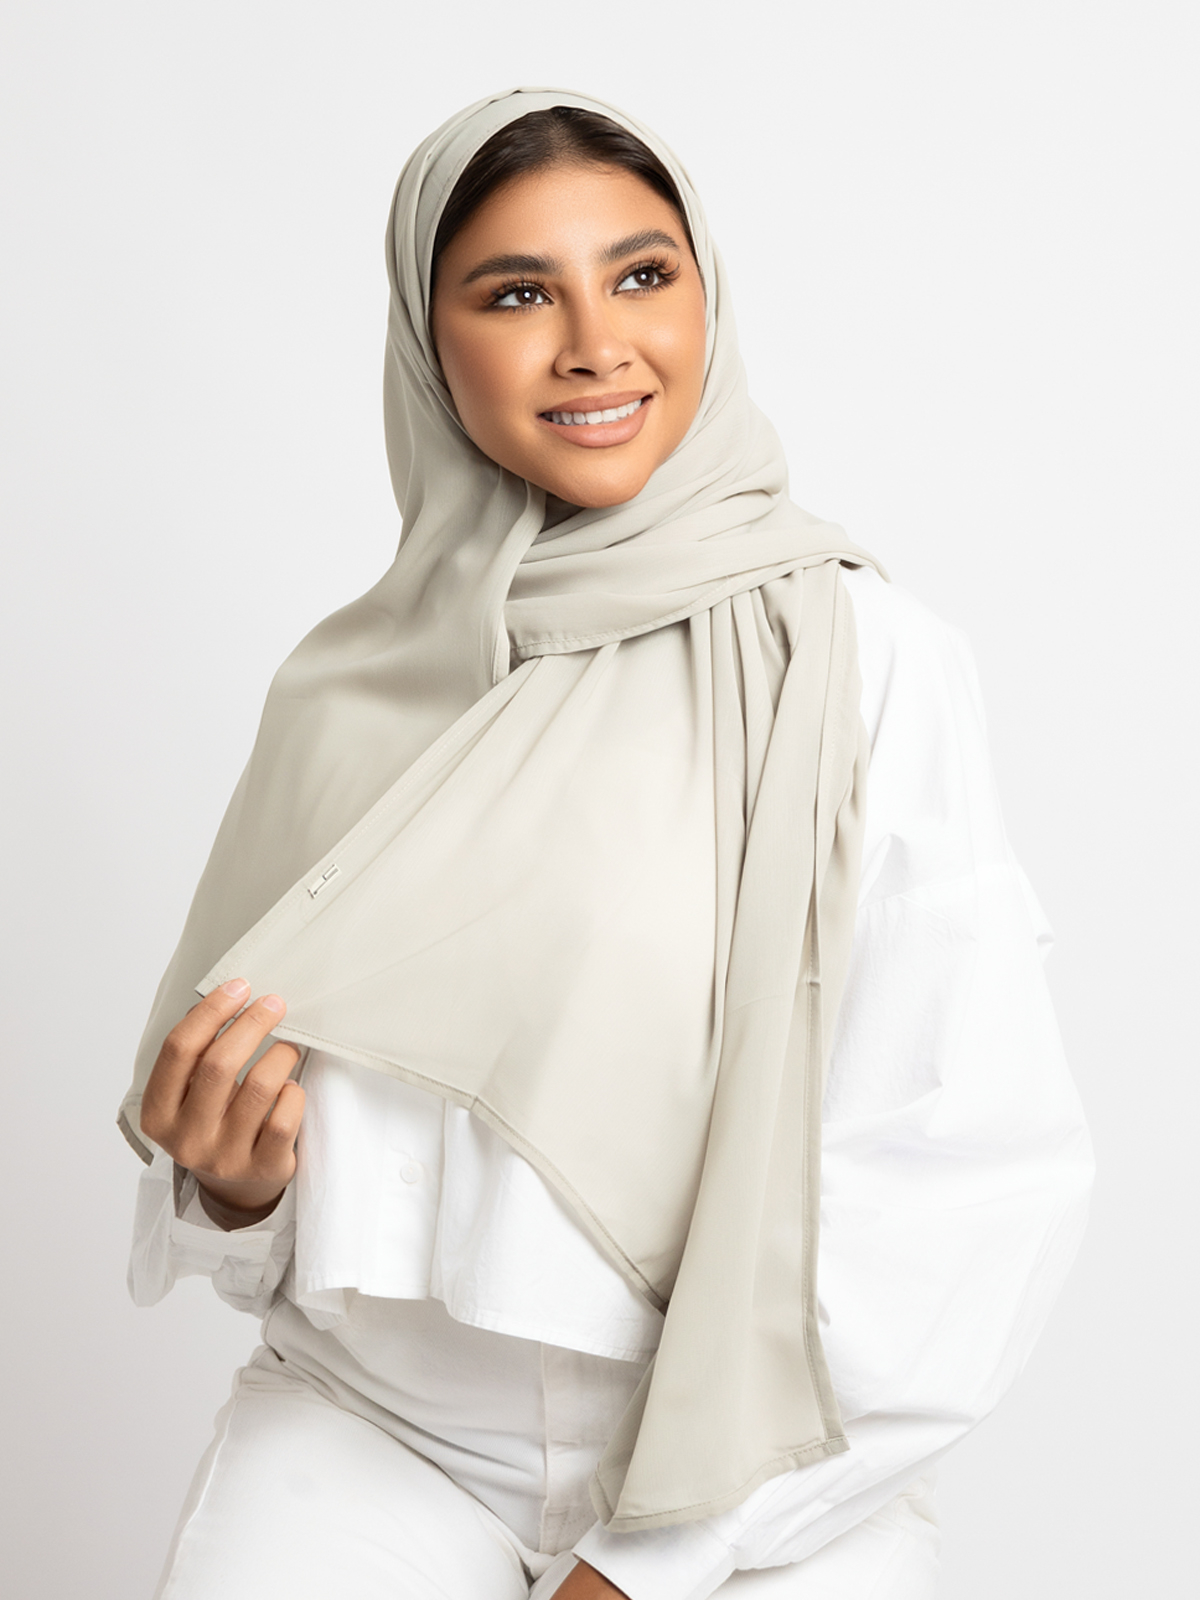 Luxurious chiffon hijab plain tarha 200 cm long light pistachio color high quality material online in ksa by kaafmeem